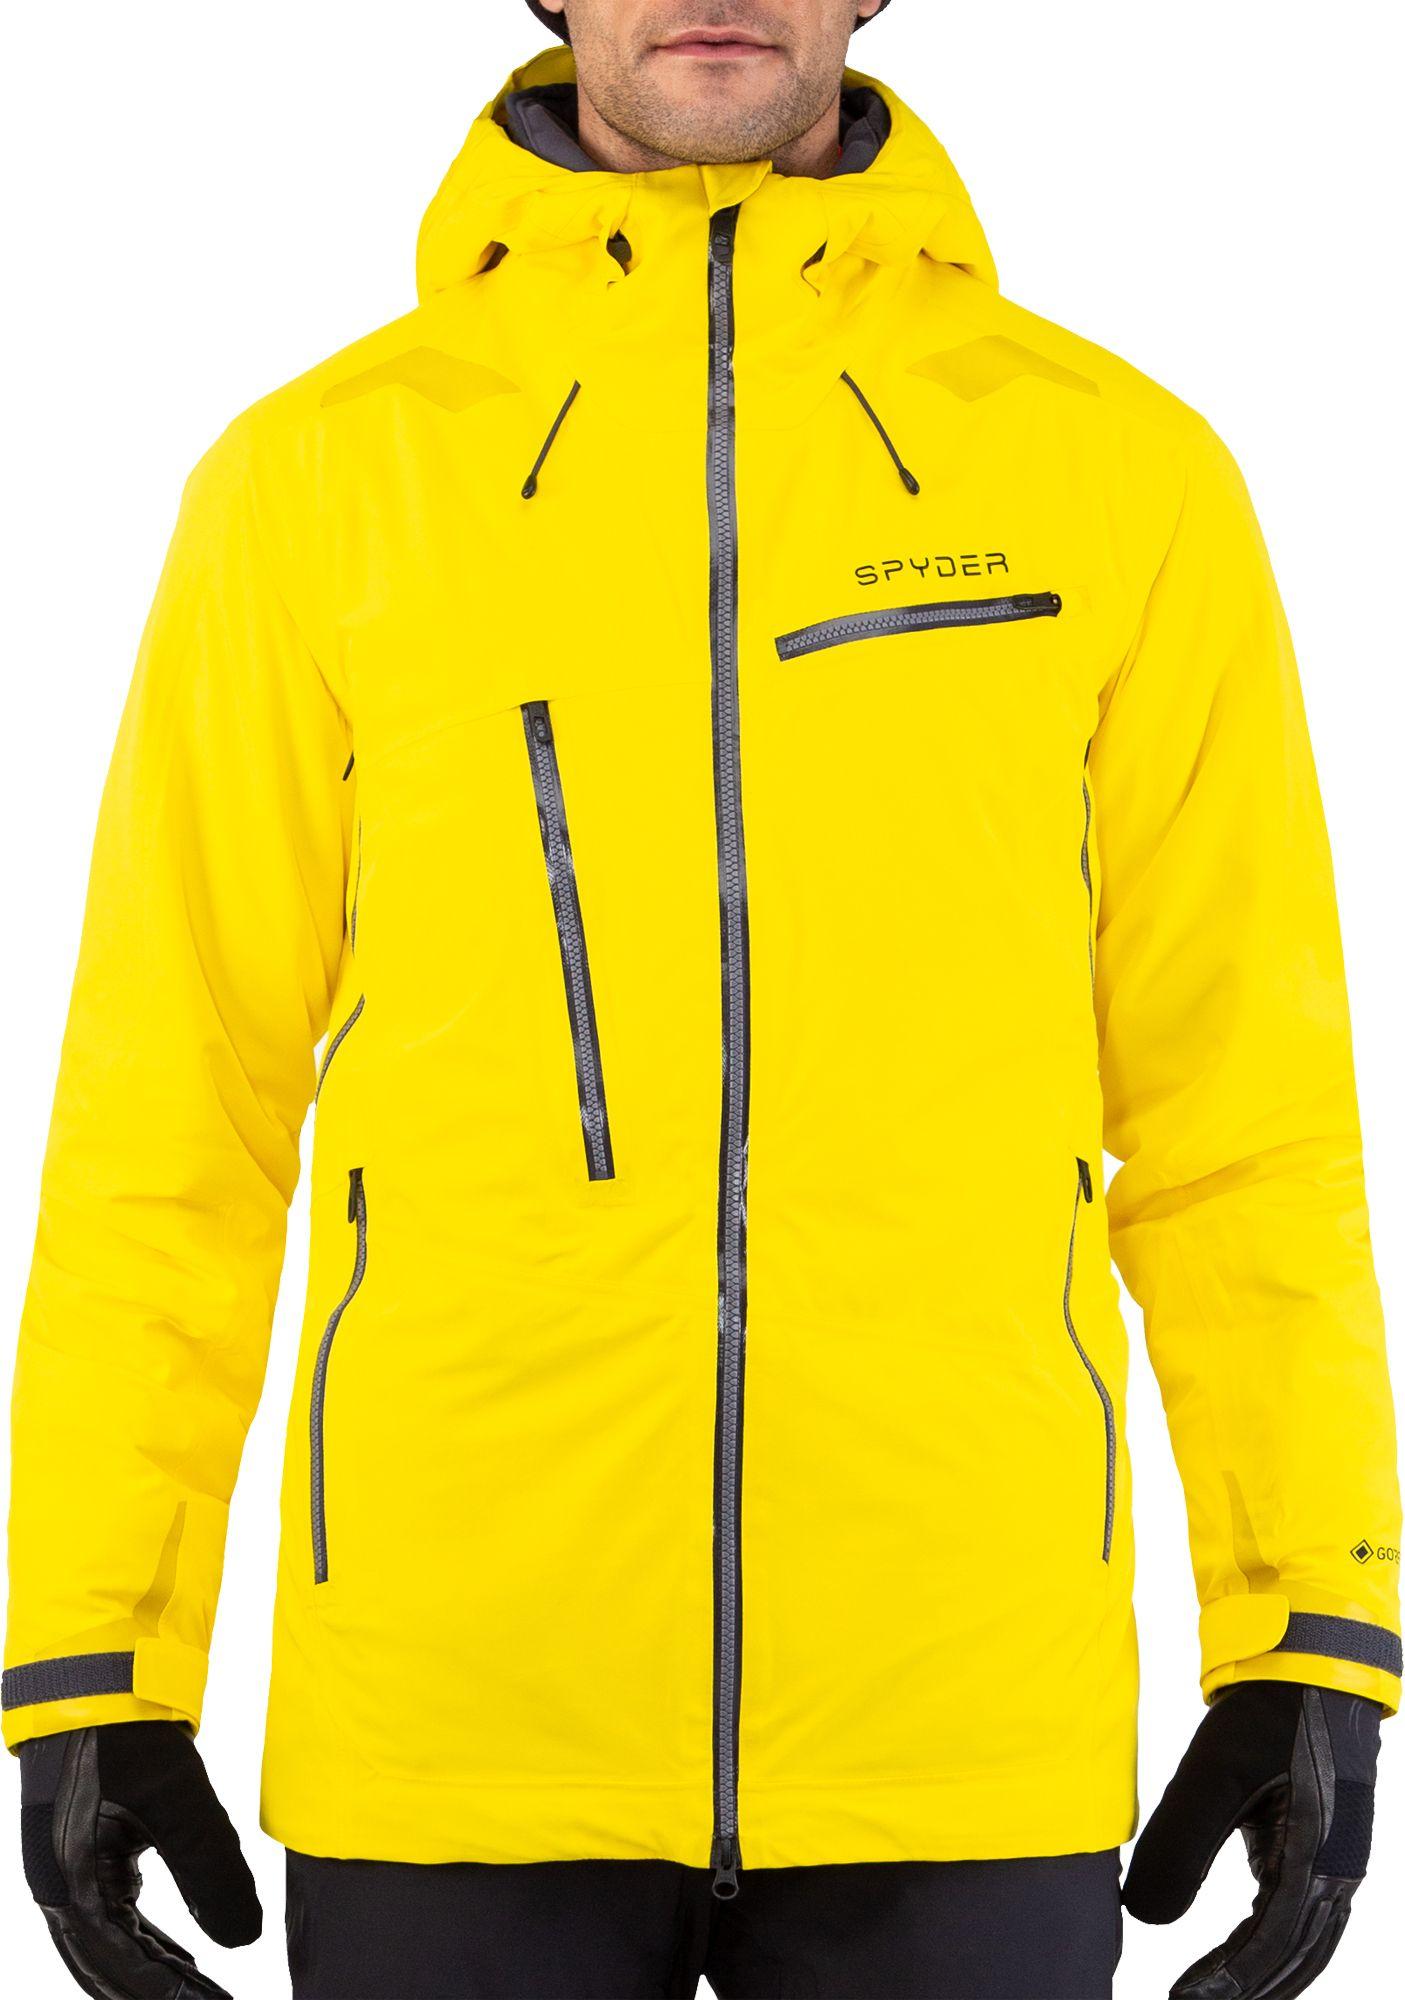 Spyder Hokkaido Gtx Ski Jacket in Yellow for Men - Lyst